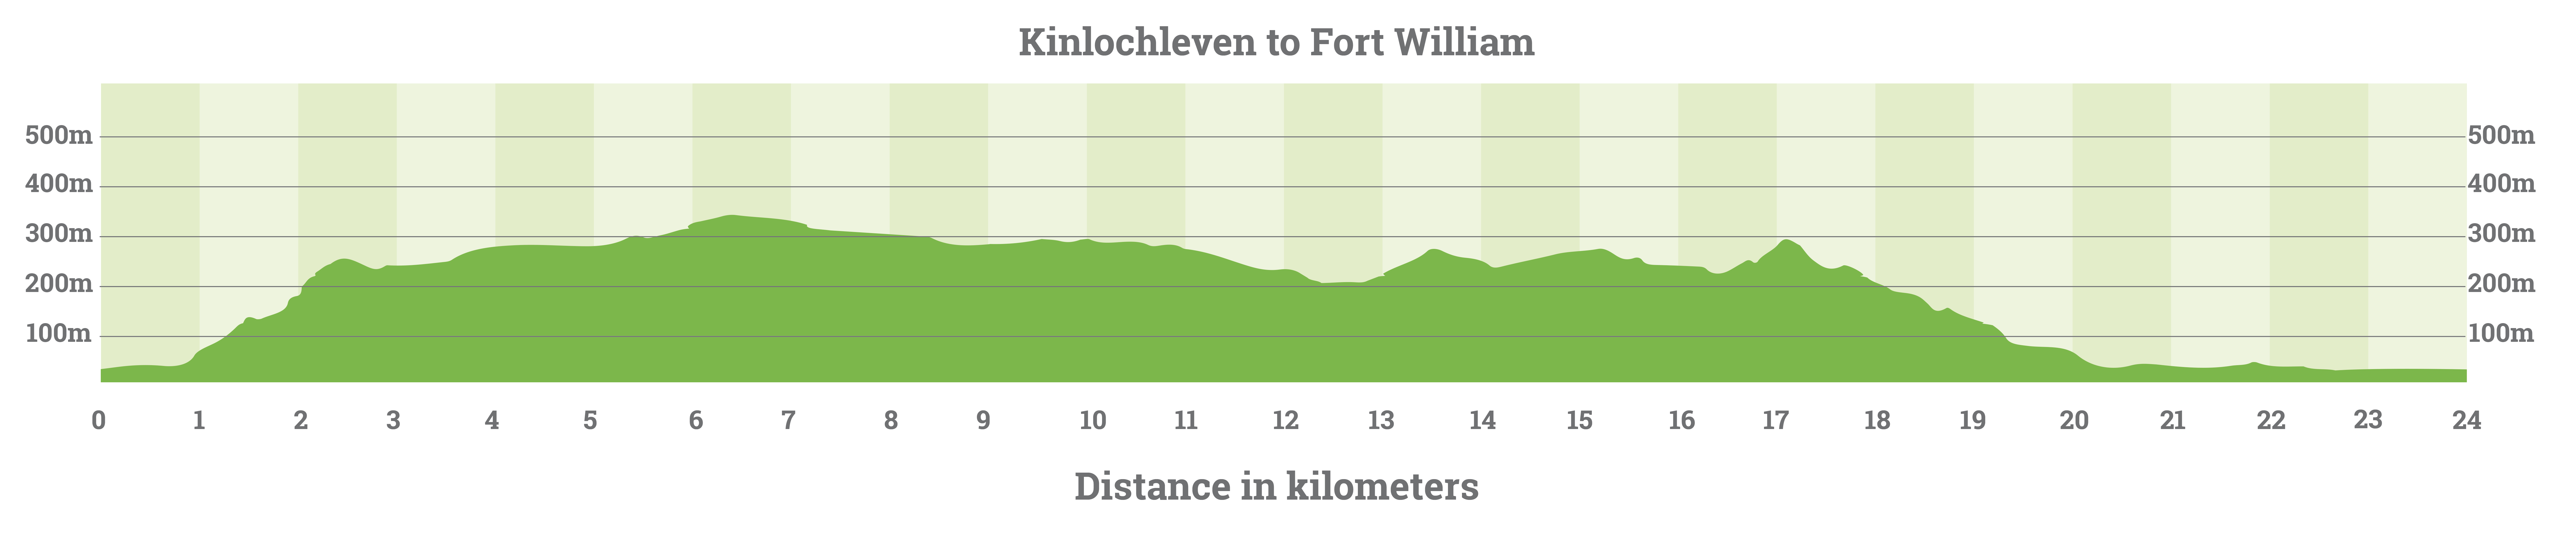 Kinlochleven-to-Fort-william-elevation